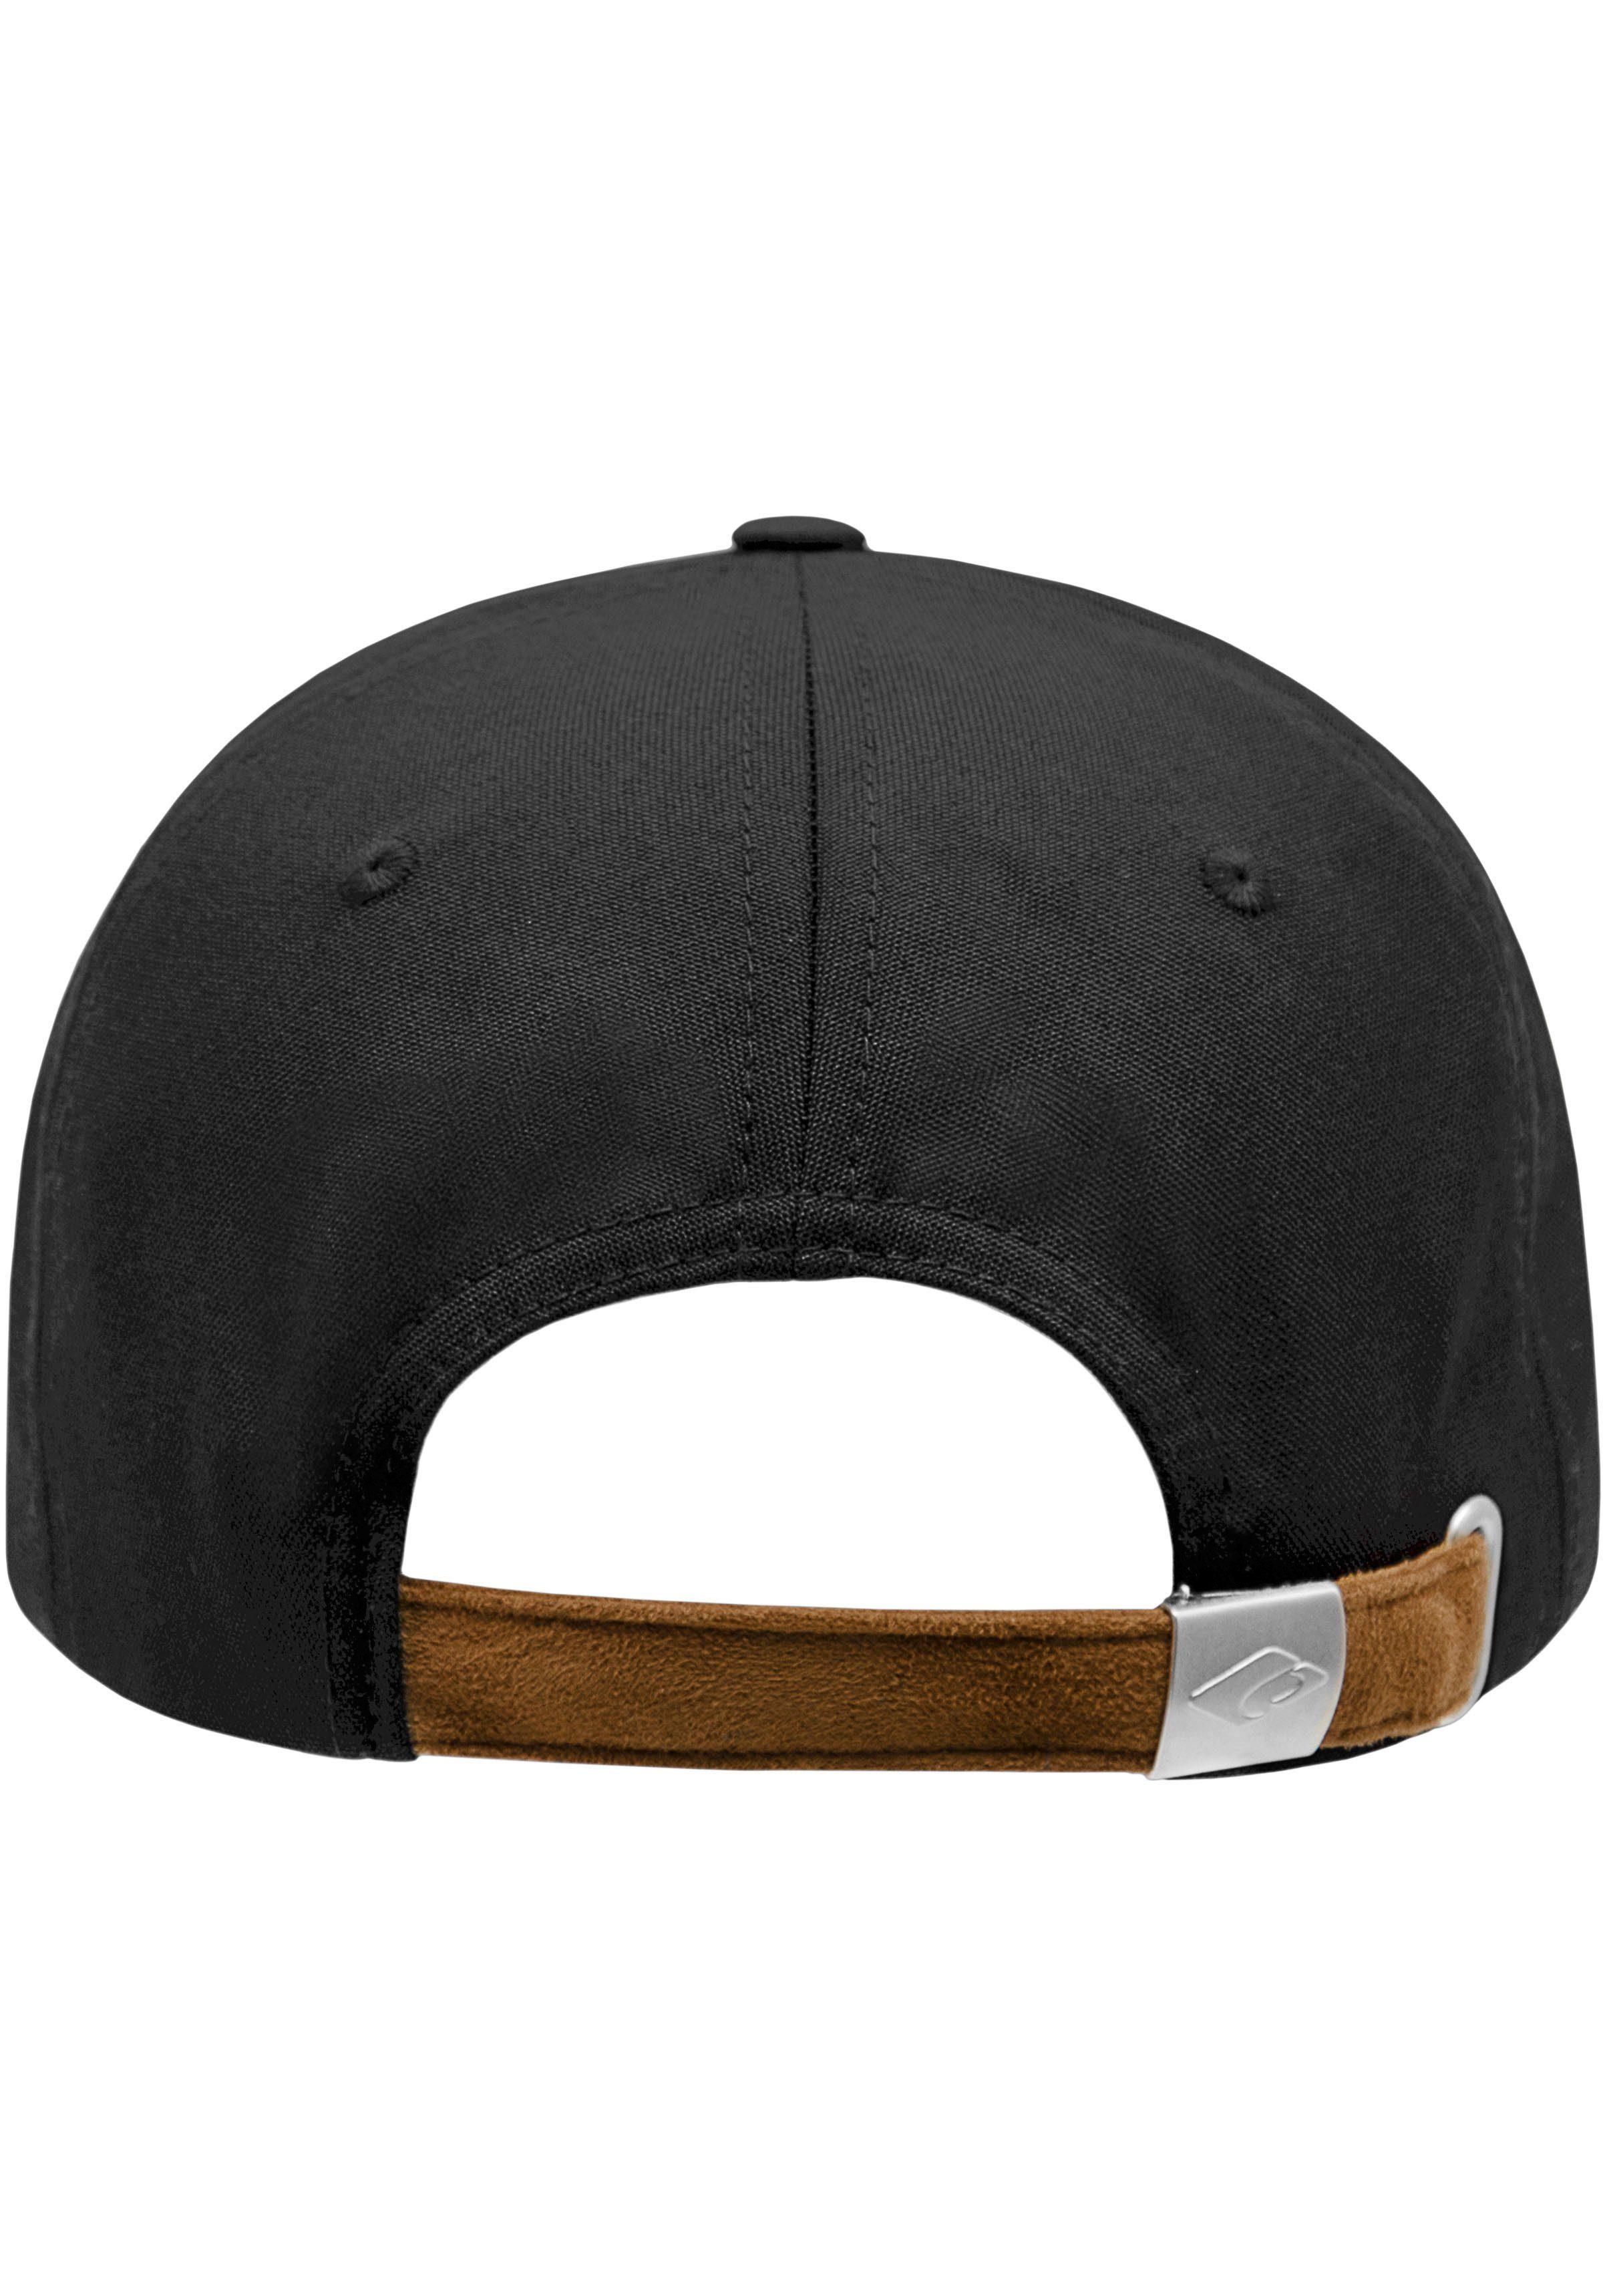 chillouts Baseball Cap Amadora Hat Size, One Optik, verstellbar in schwarz melierter